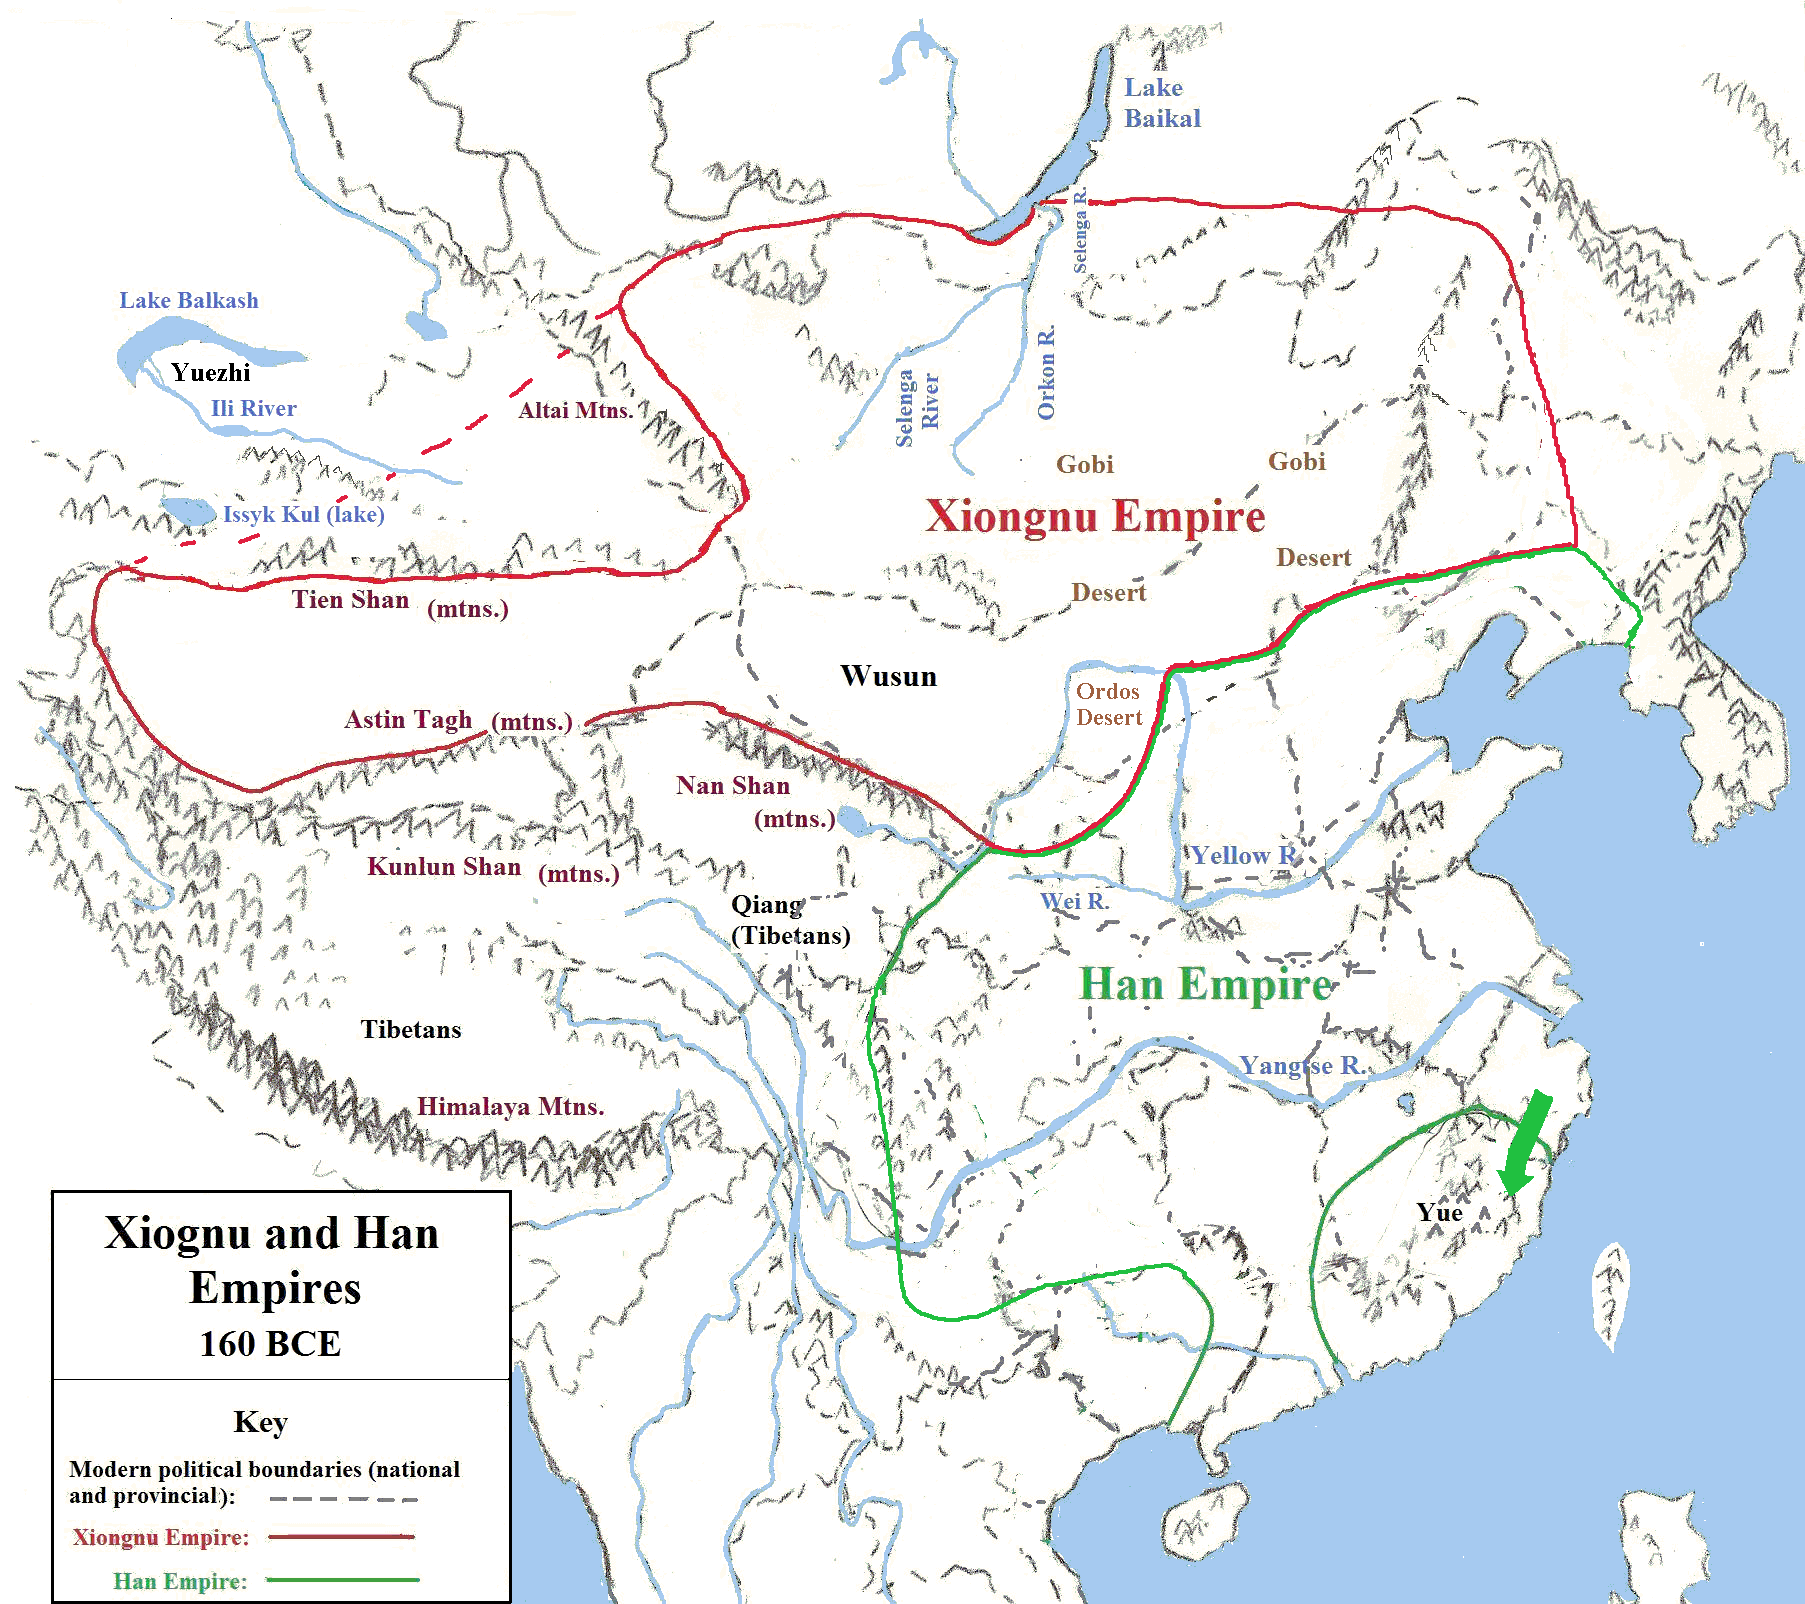 Xiongnu and Han Empires in 160 B.C.